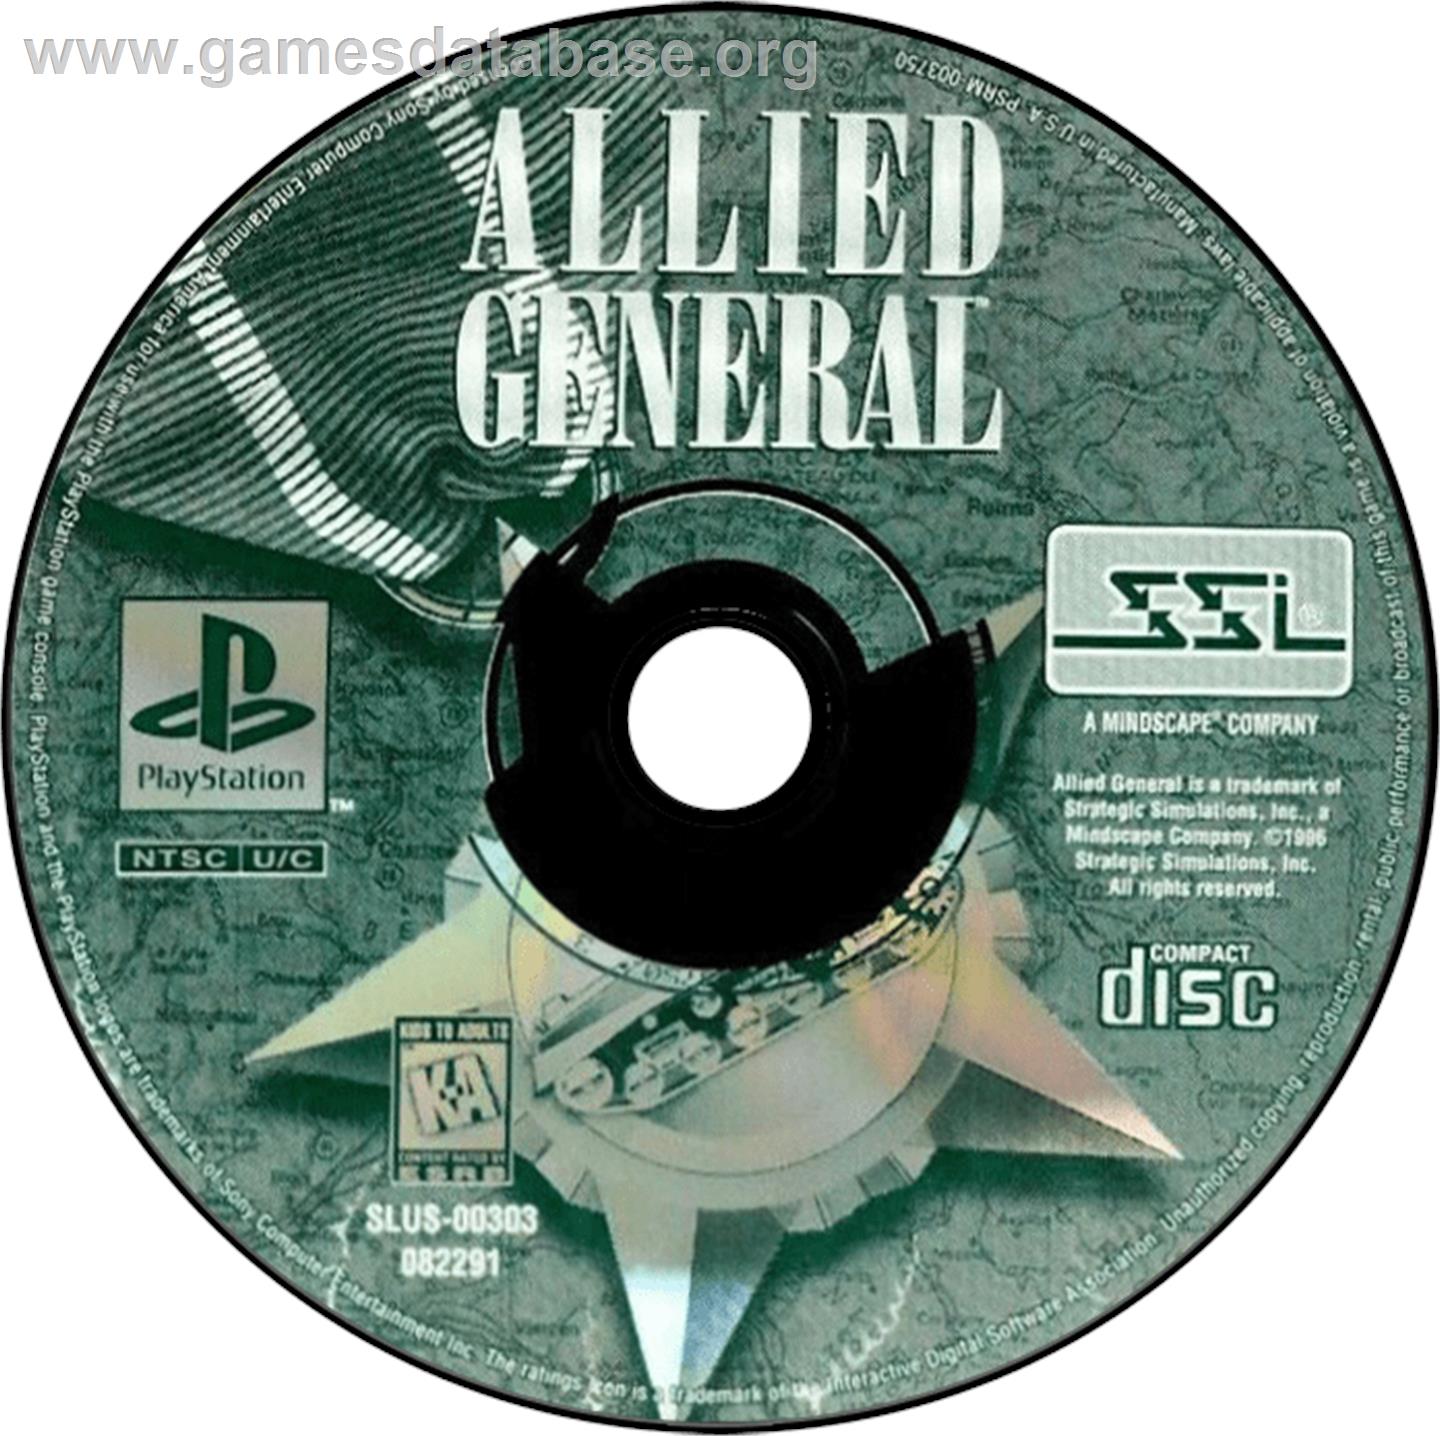 Allied General - Sony Playstation - Artwork - Disc